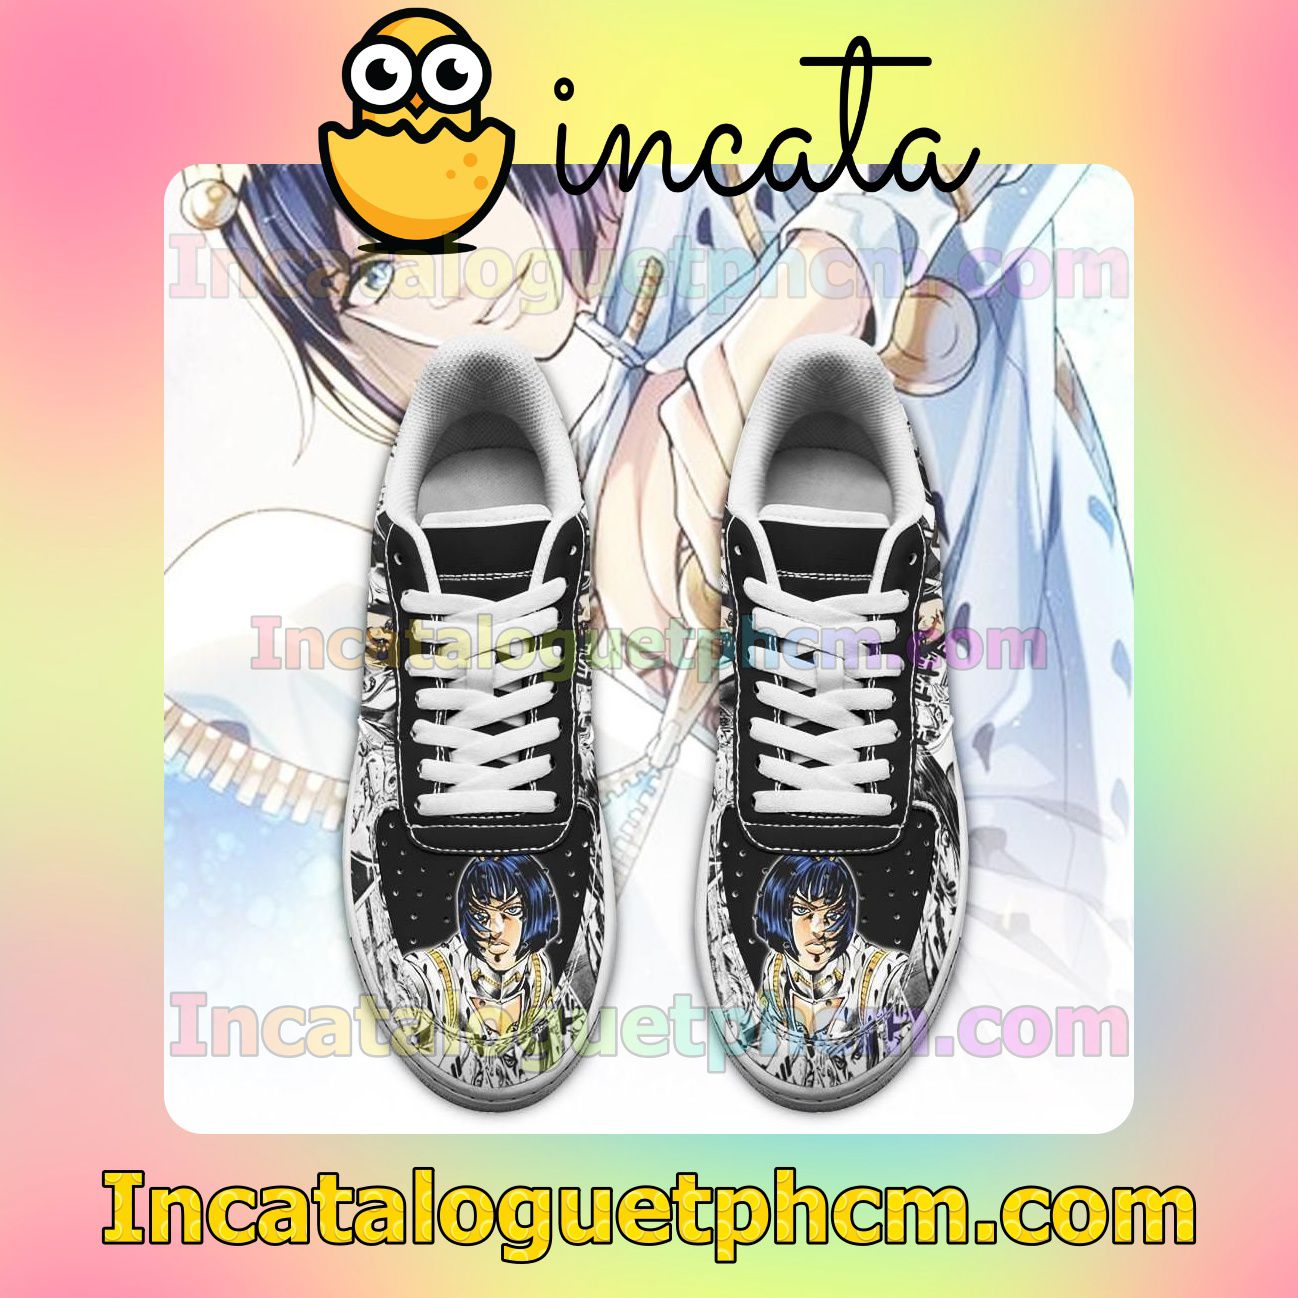 The cheapest Bruno Bucciarati Manga JoJo's Anime Nike Low Shoes Sneakers